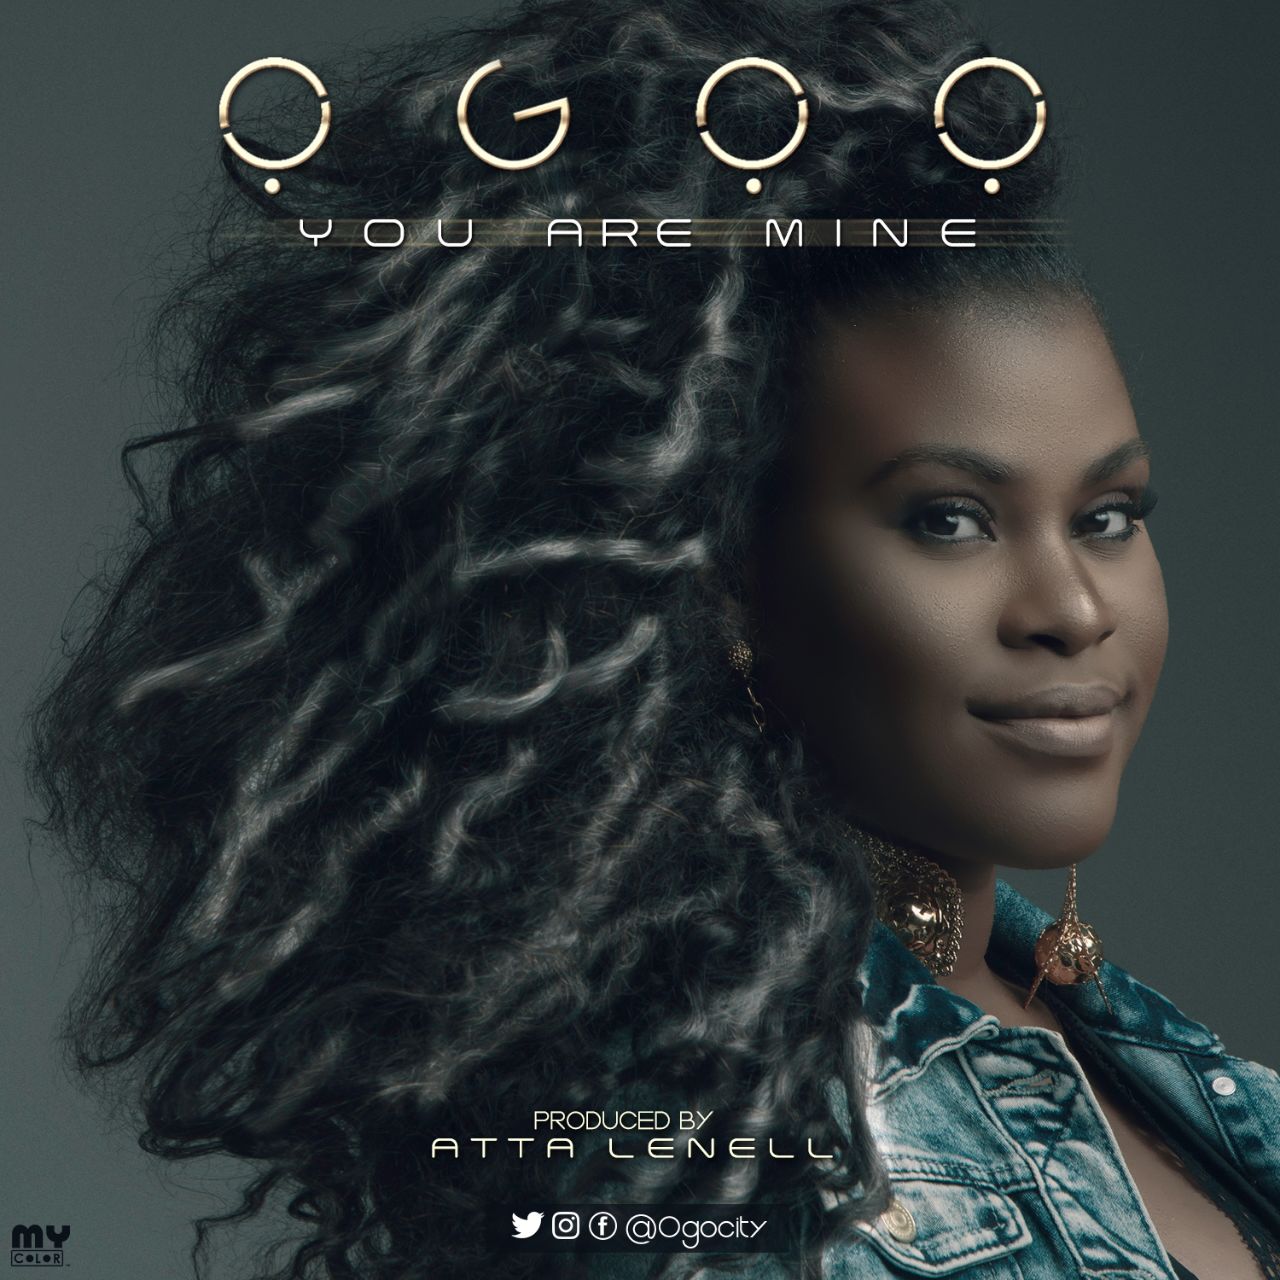 Ogoo - You are mine